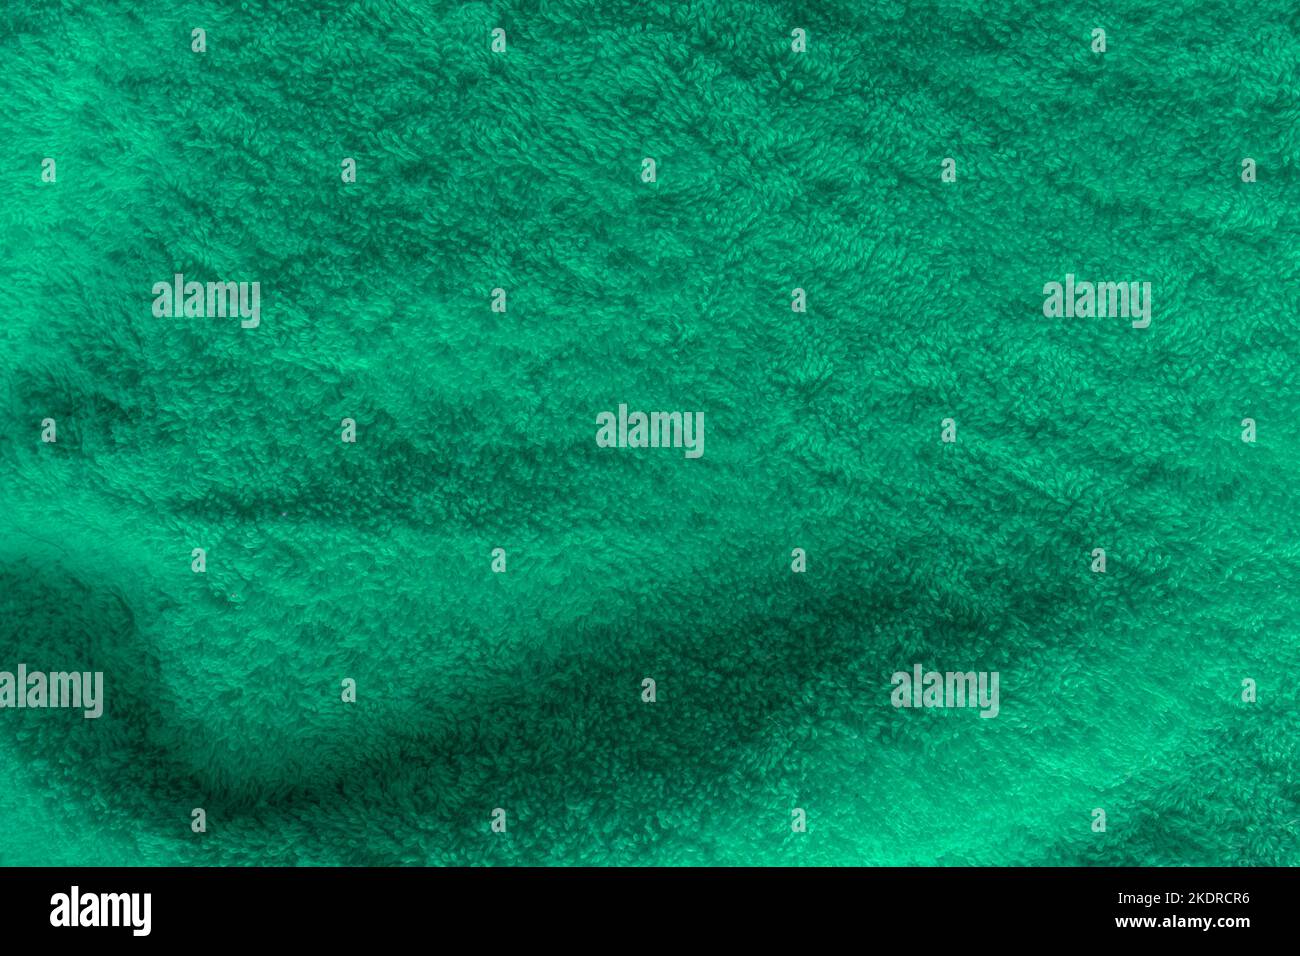 Piel verde lana textura aguamarina fondo patrón pelo suave esponjoso abstracto animal. Foto de stock